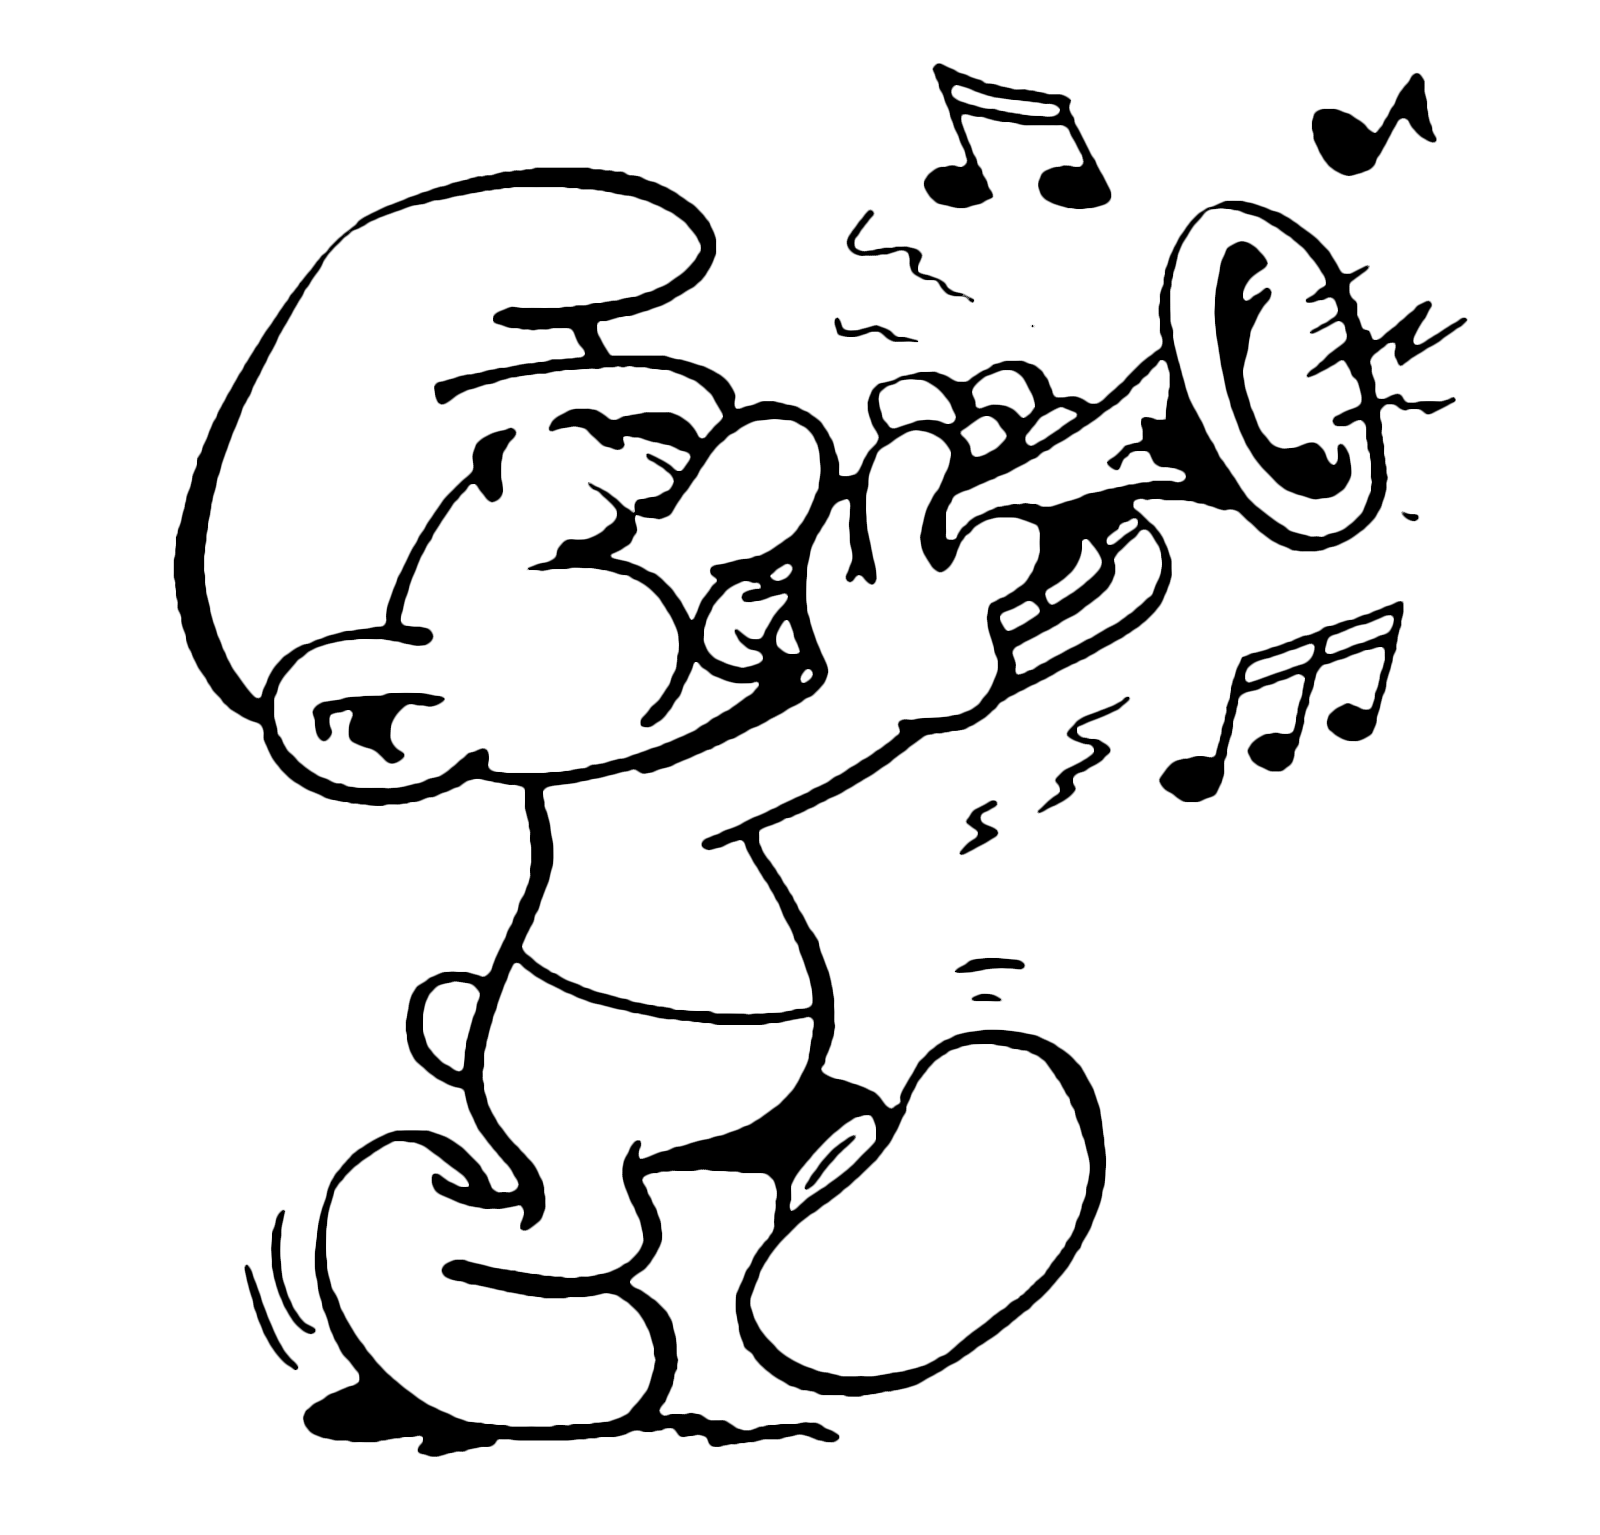 The Smurfs - Harmony Smurf plays the trumpet